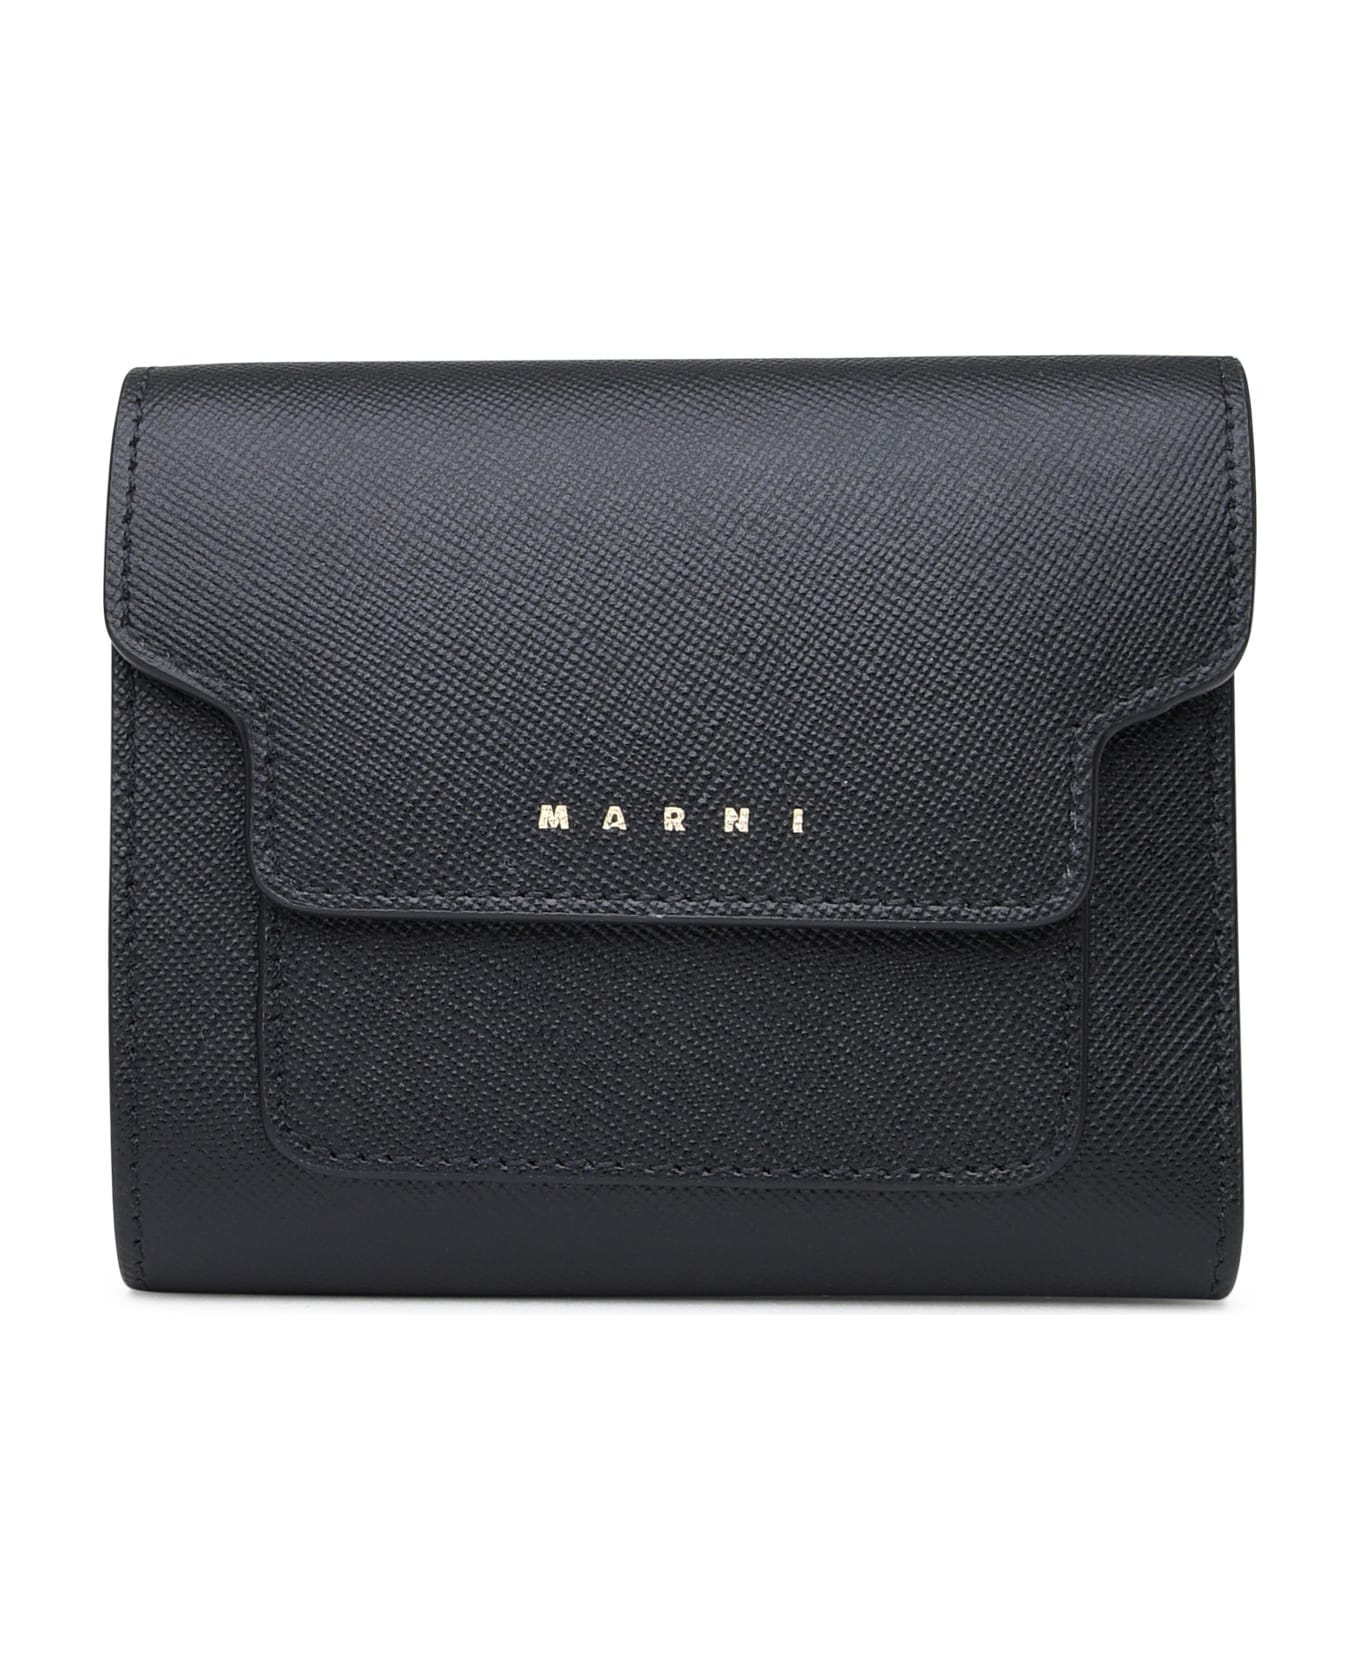 Marni Black Leather Wallet - N Black 財布